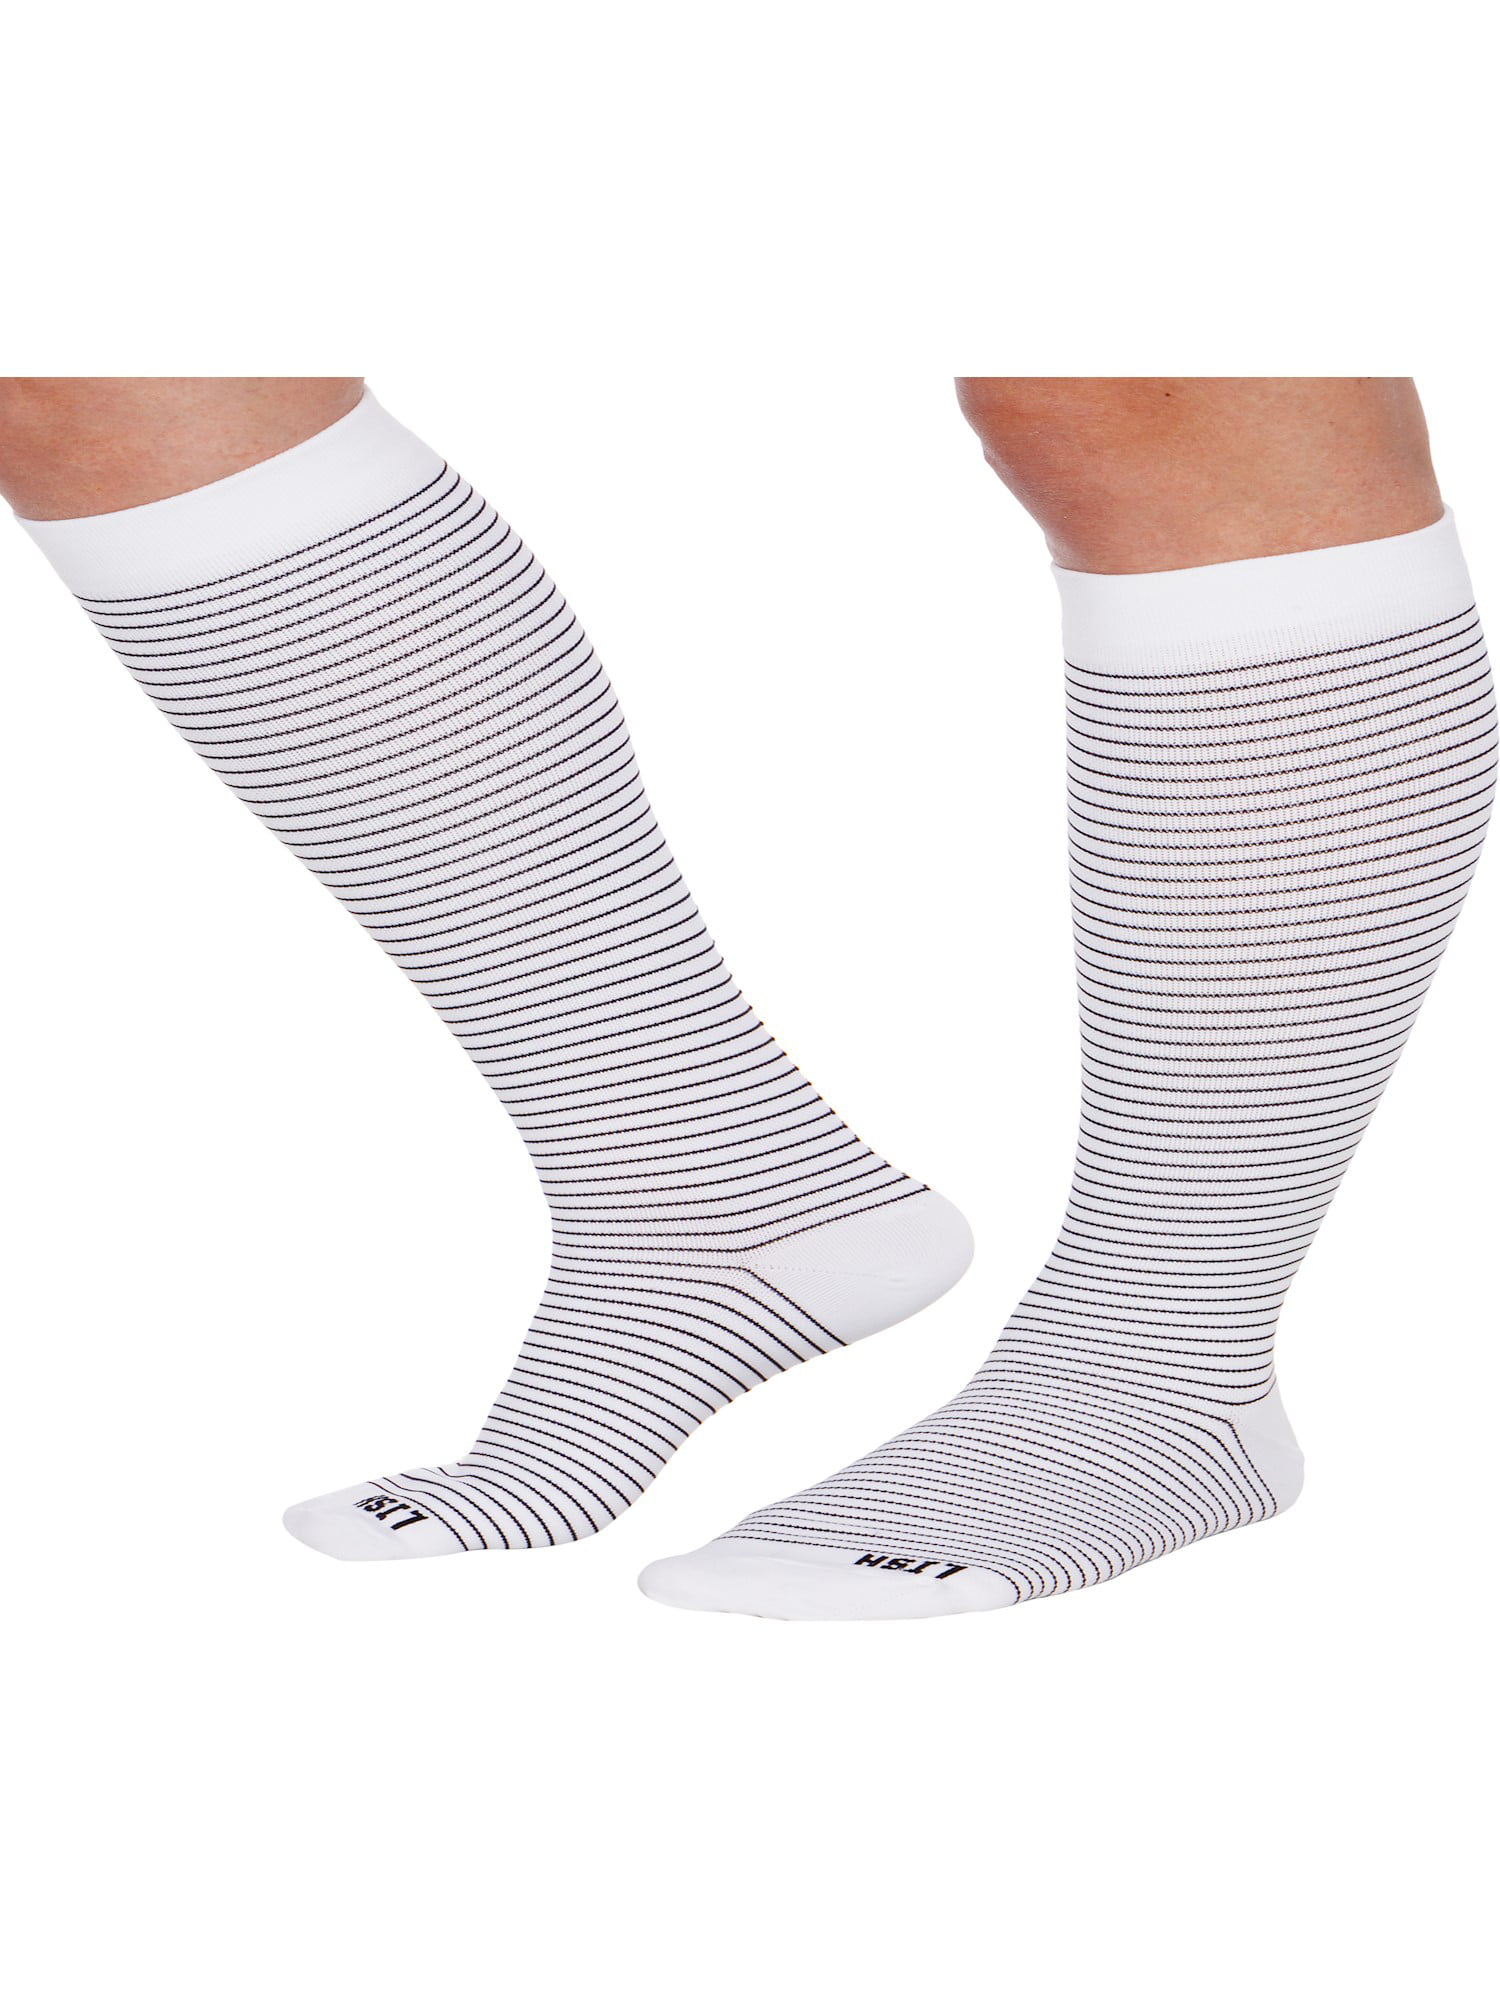 LISH Skinny Stripe Wide Calf Compression Socks Graduated 15-25 mmHg Knee High Striped Plus Size Support Stockings